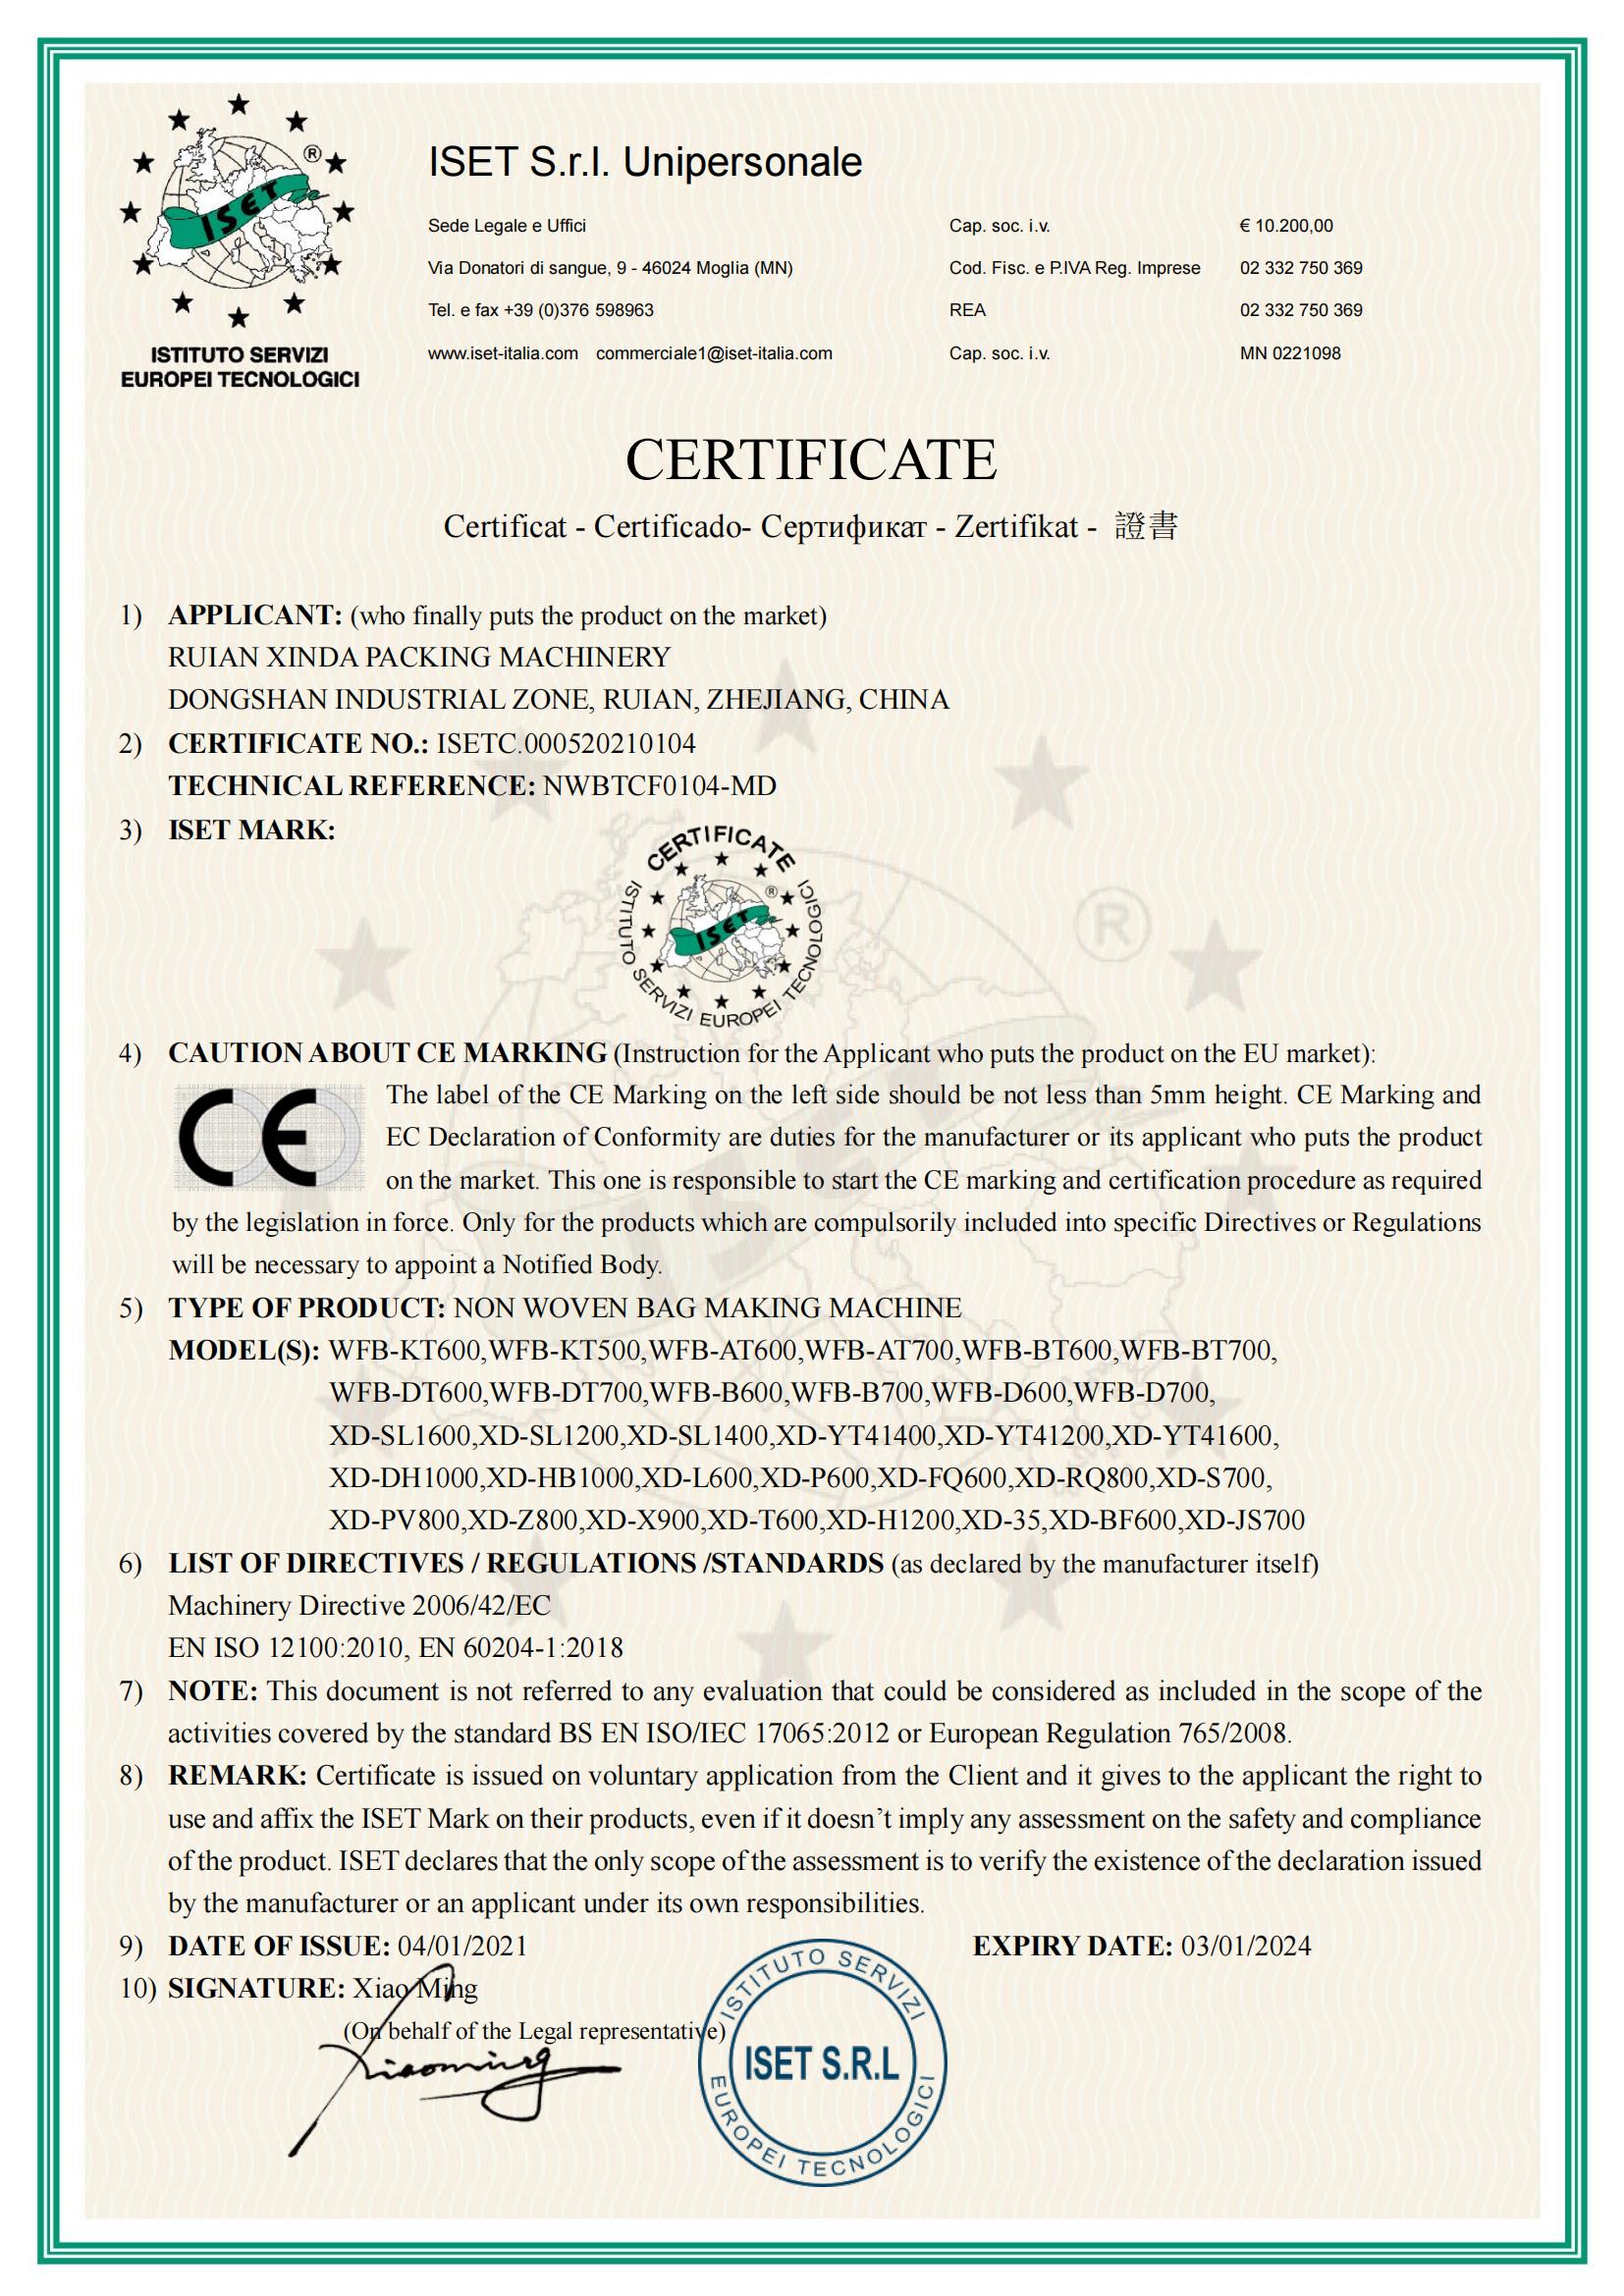 certificate image (1)